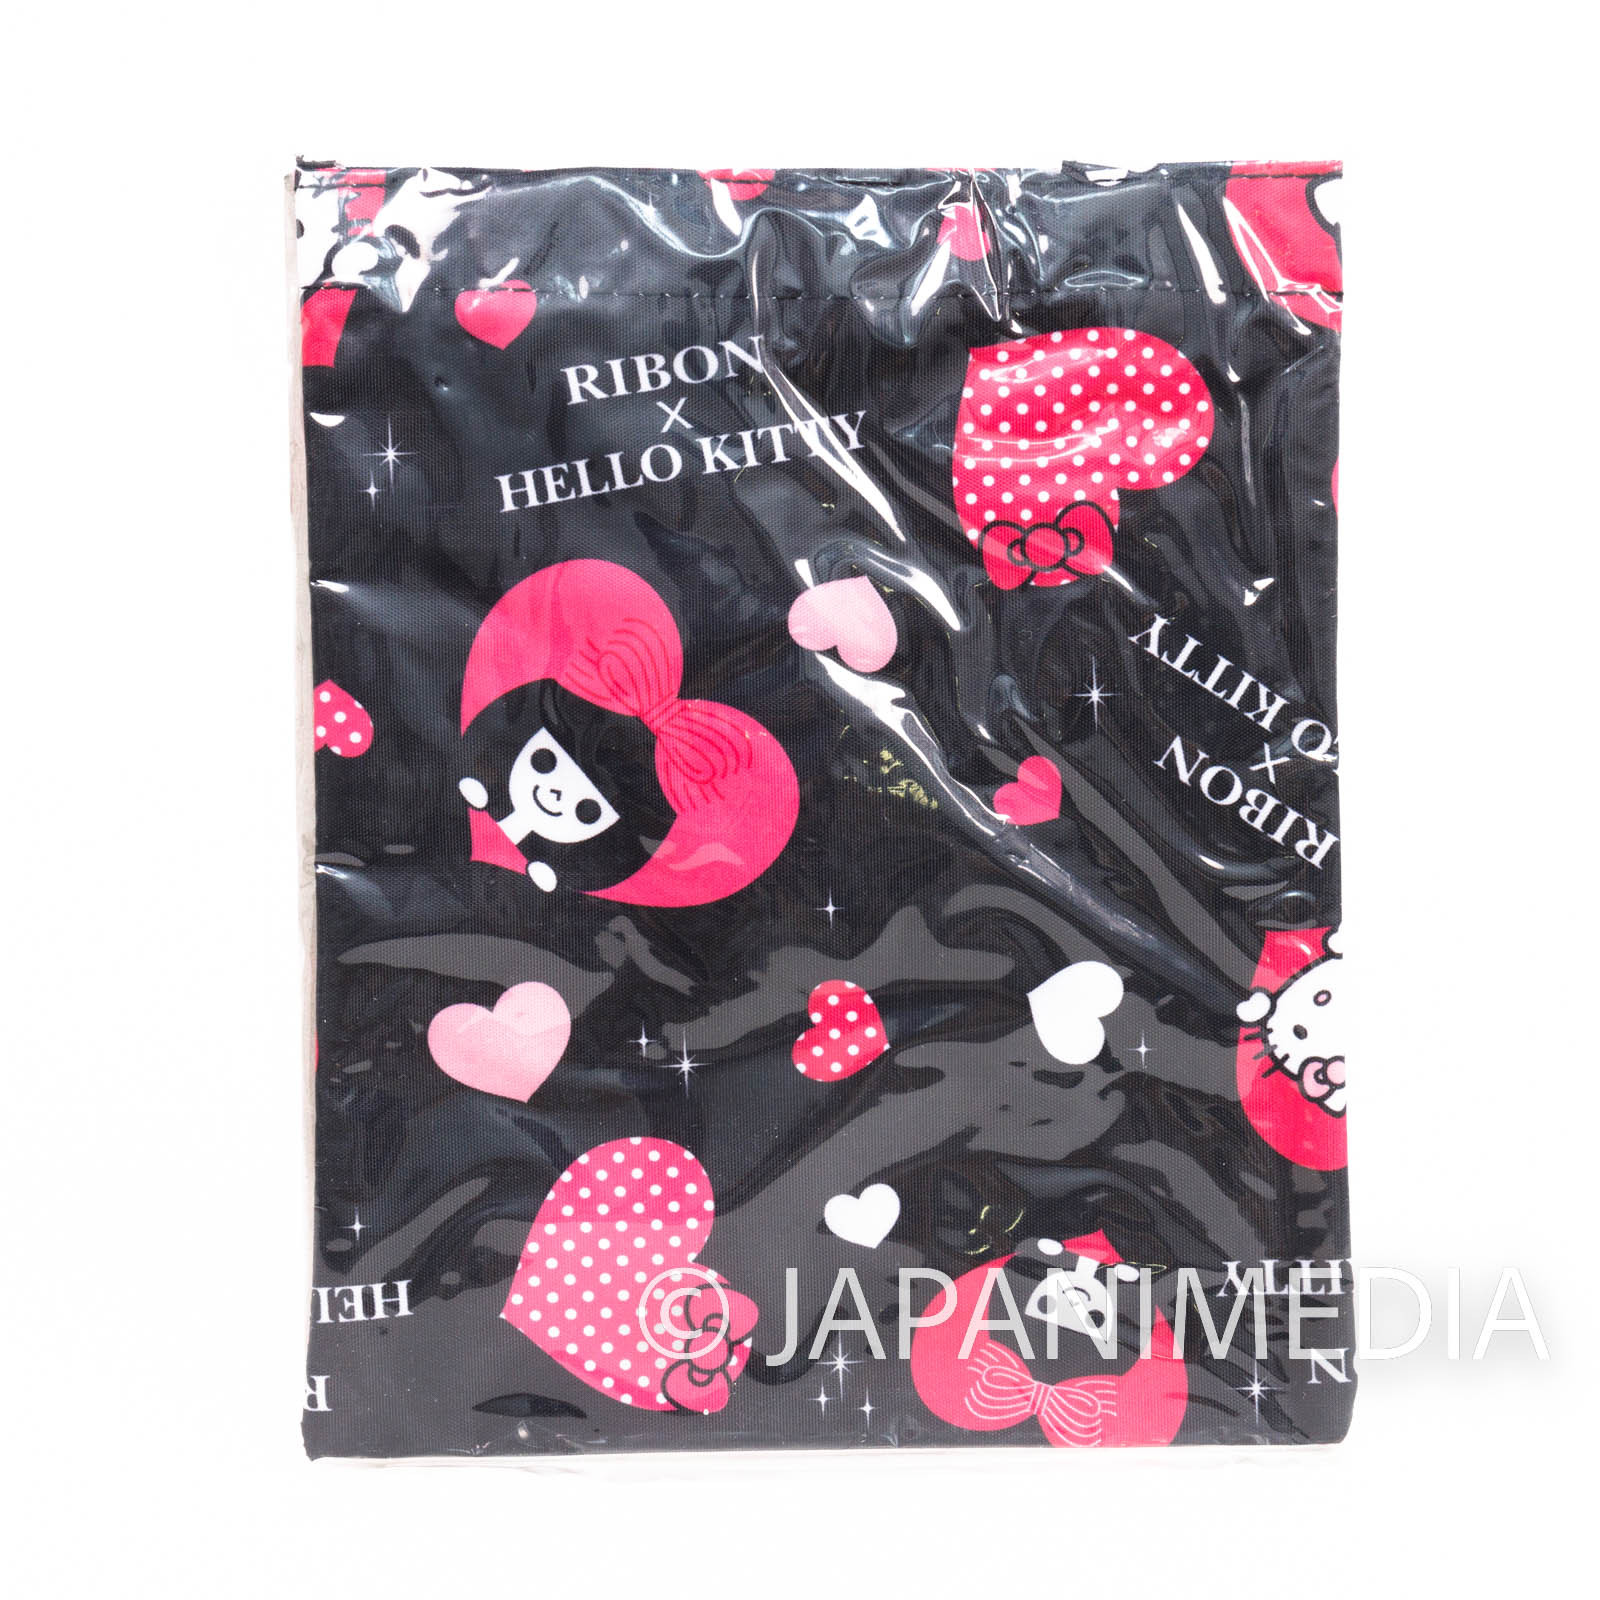 Ribon x Hello Kitty Collaboration Mini Tote bag  JAPAN